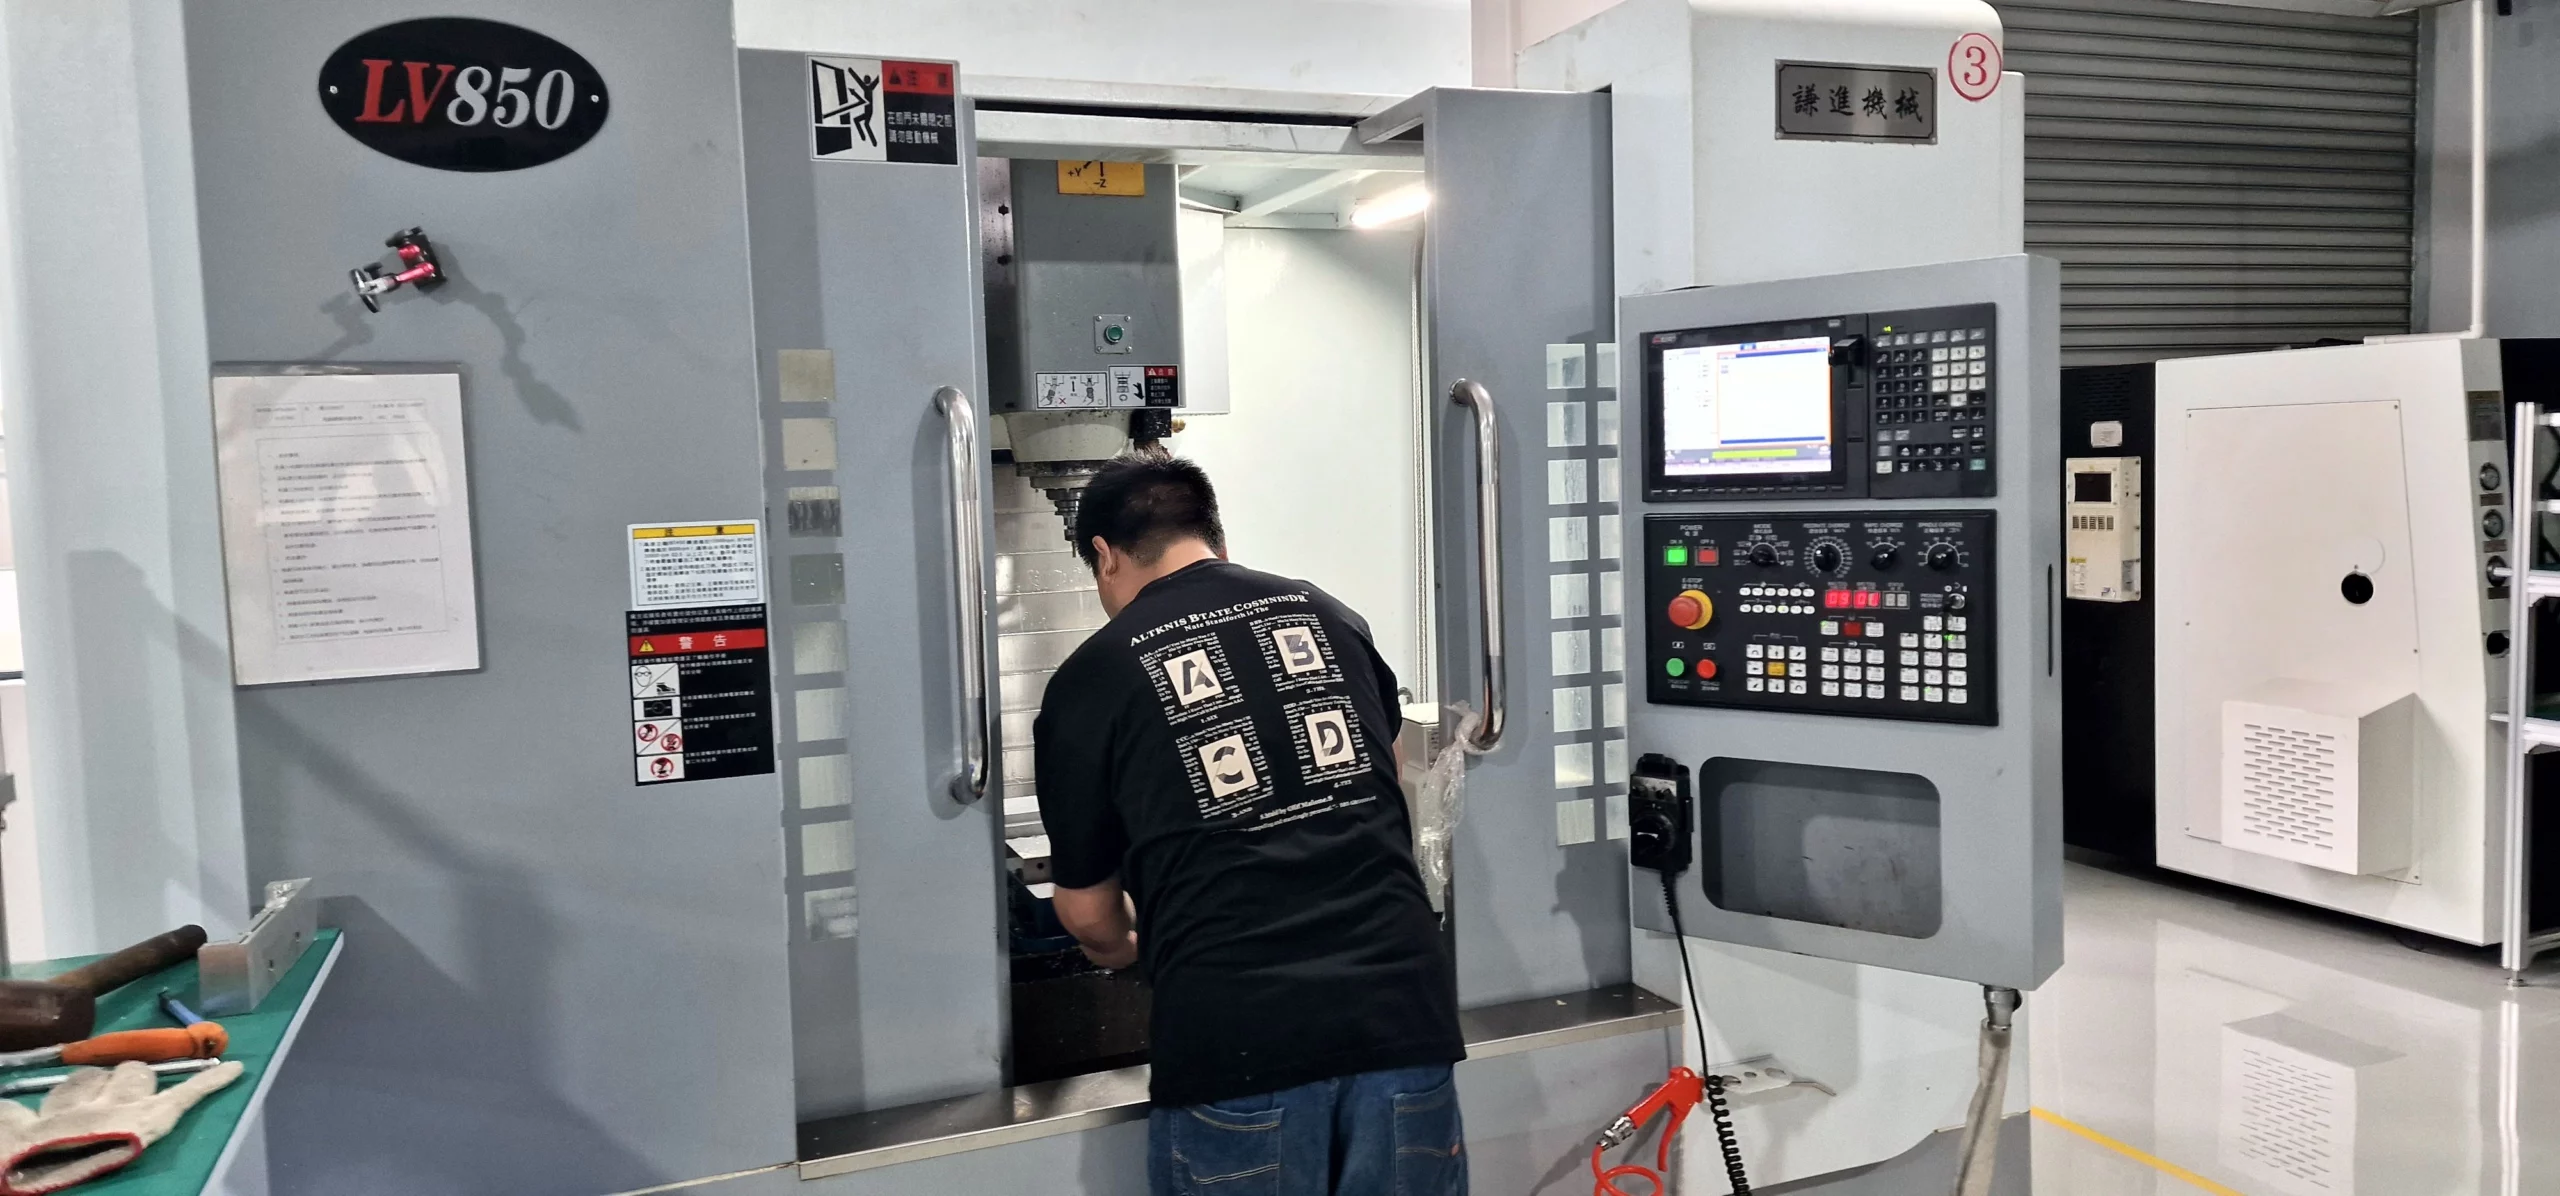 CNC machining workshop at Davantech